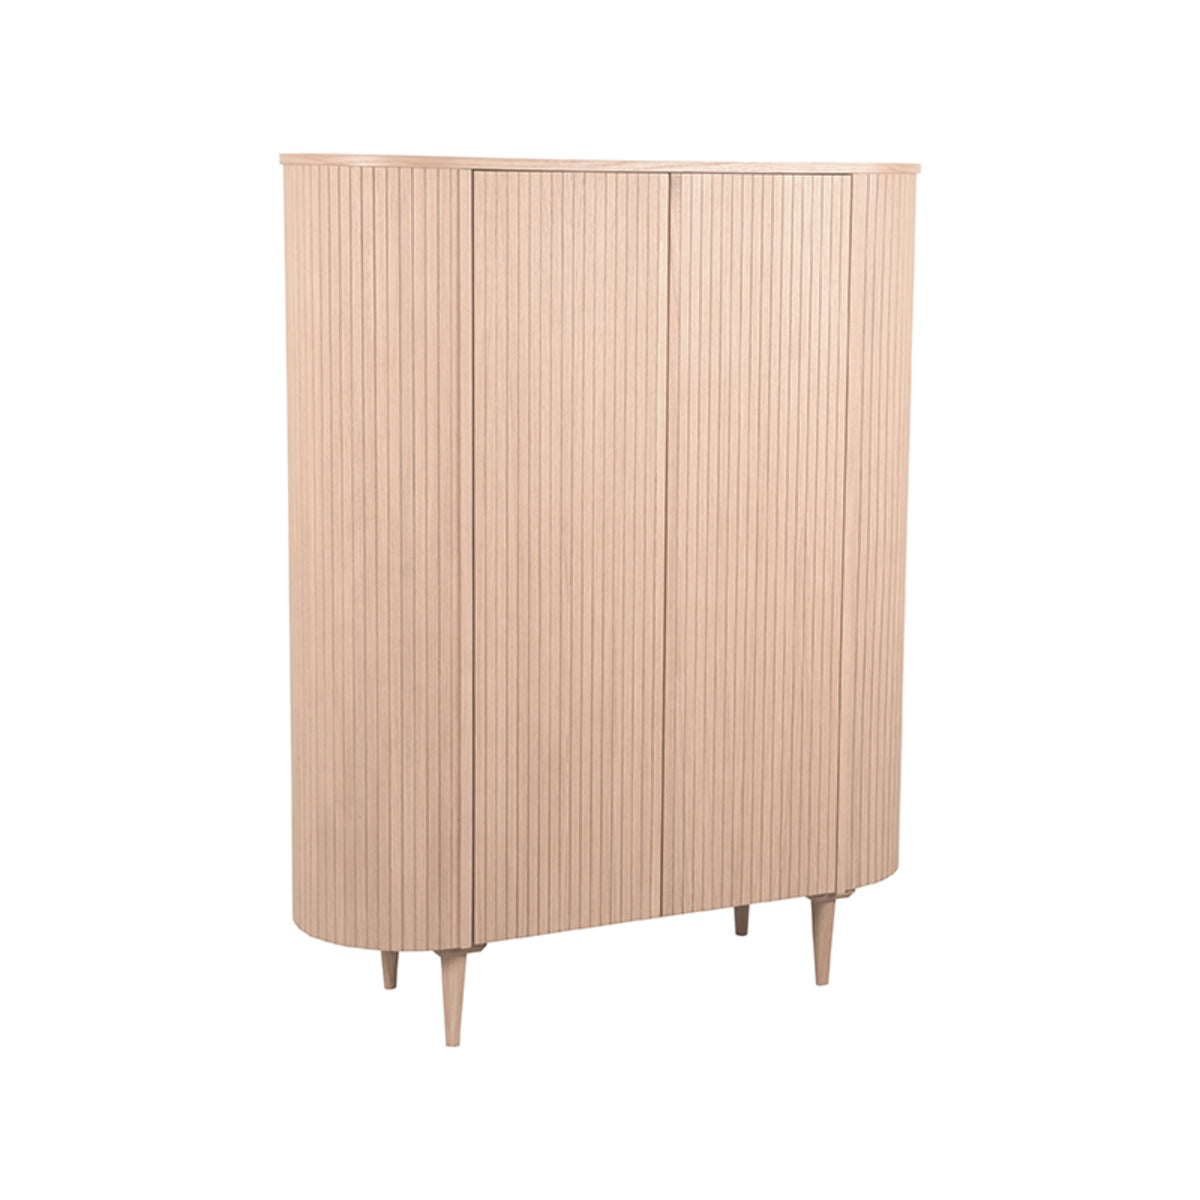 LABEL51 Storage cupboard Oliva - Natural - Oak - 125 cm